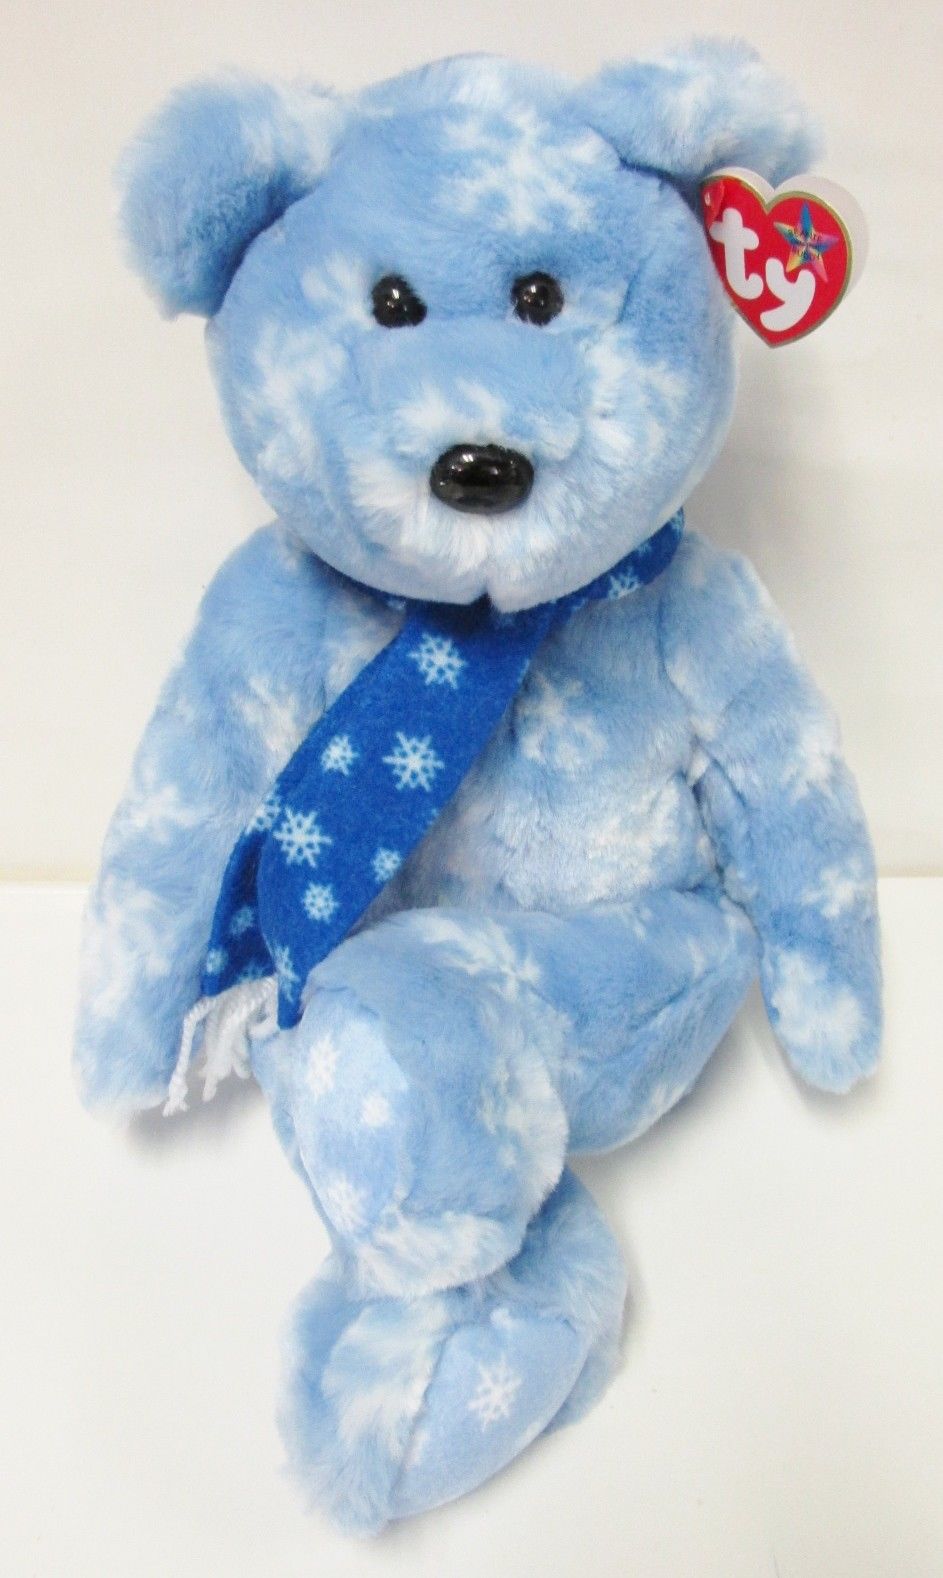 2002 holiday teddy beanie baby